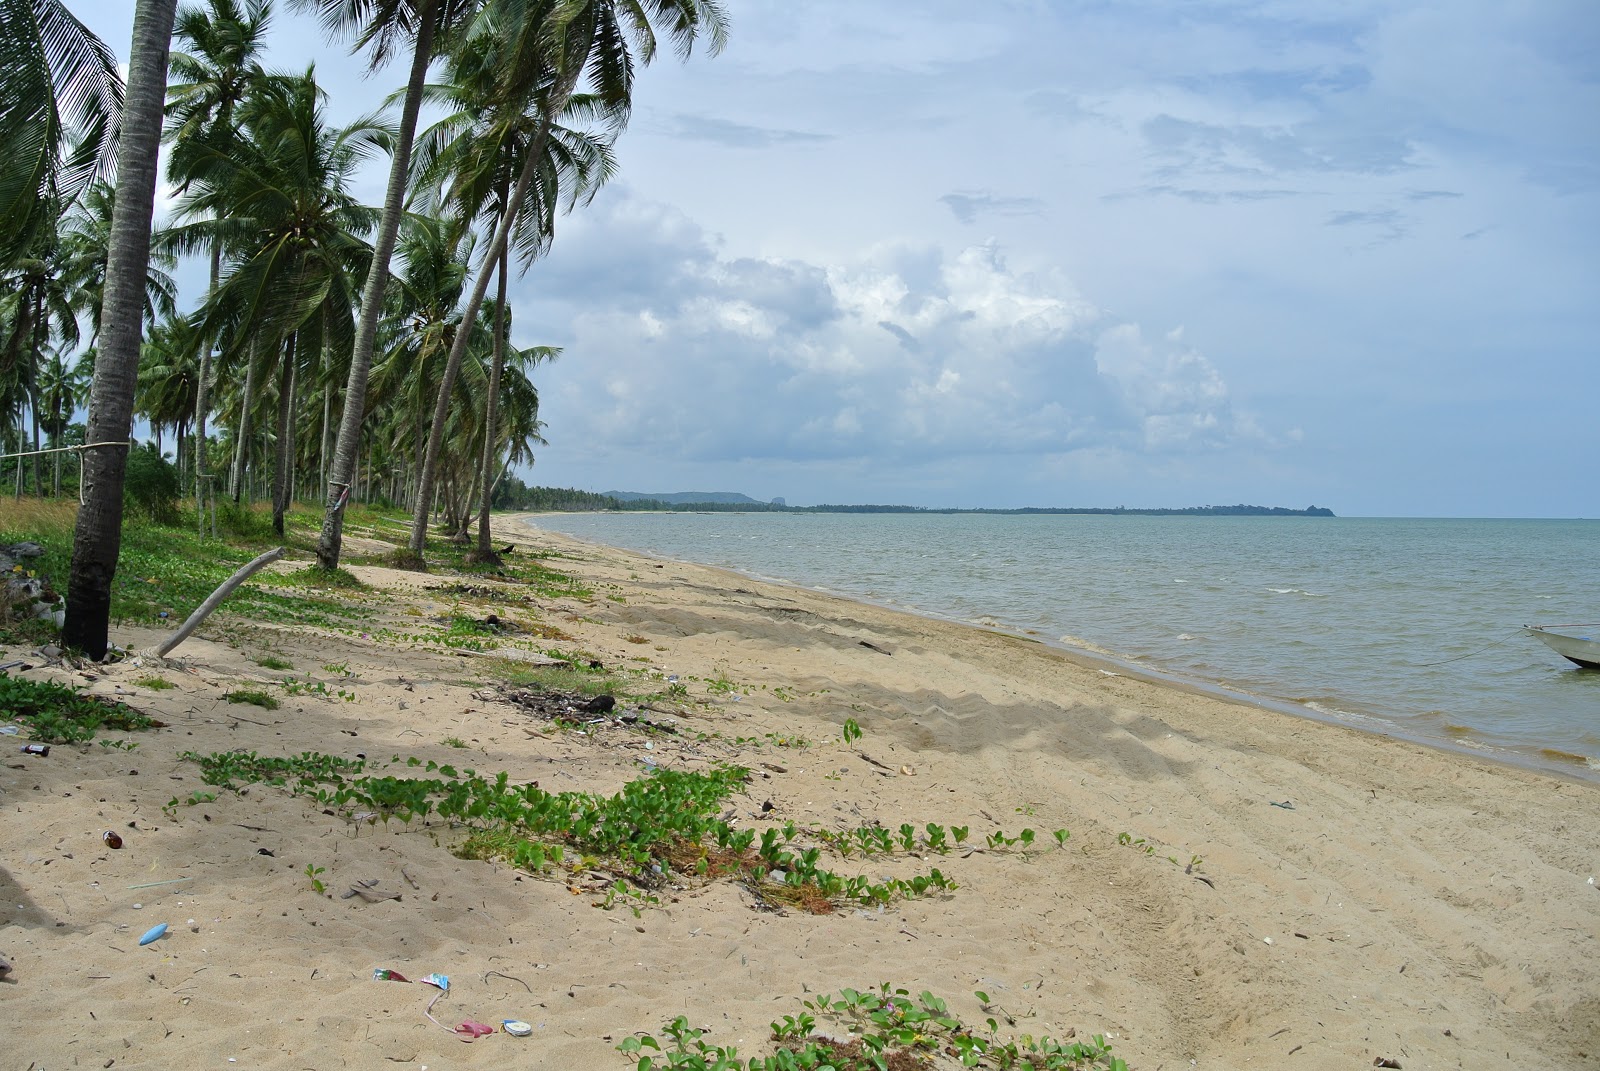 Fotografija Tawanchai Beach nahaja se v naravnem okolju